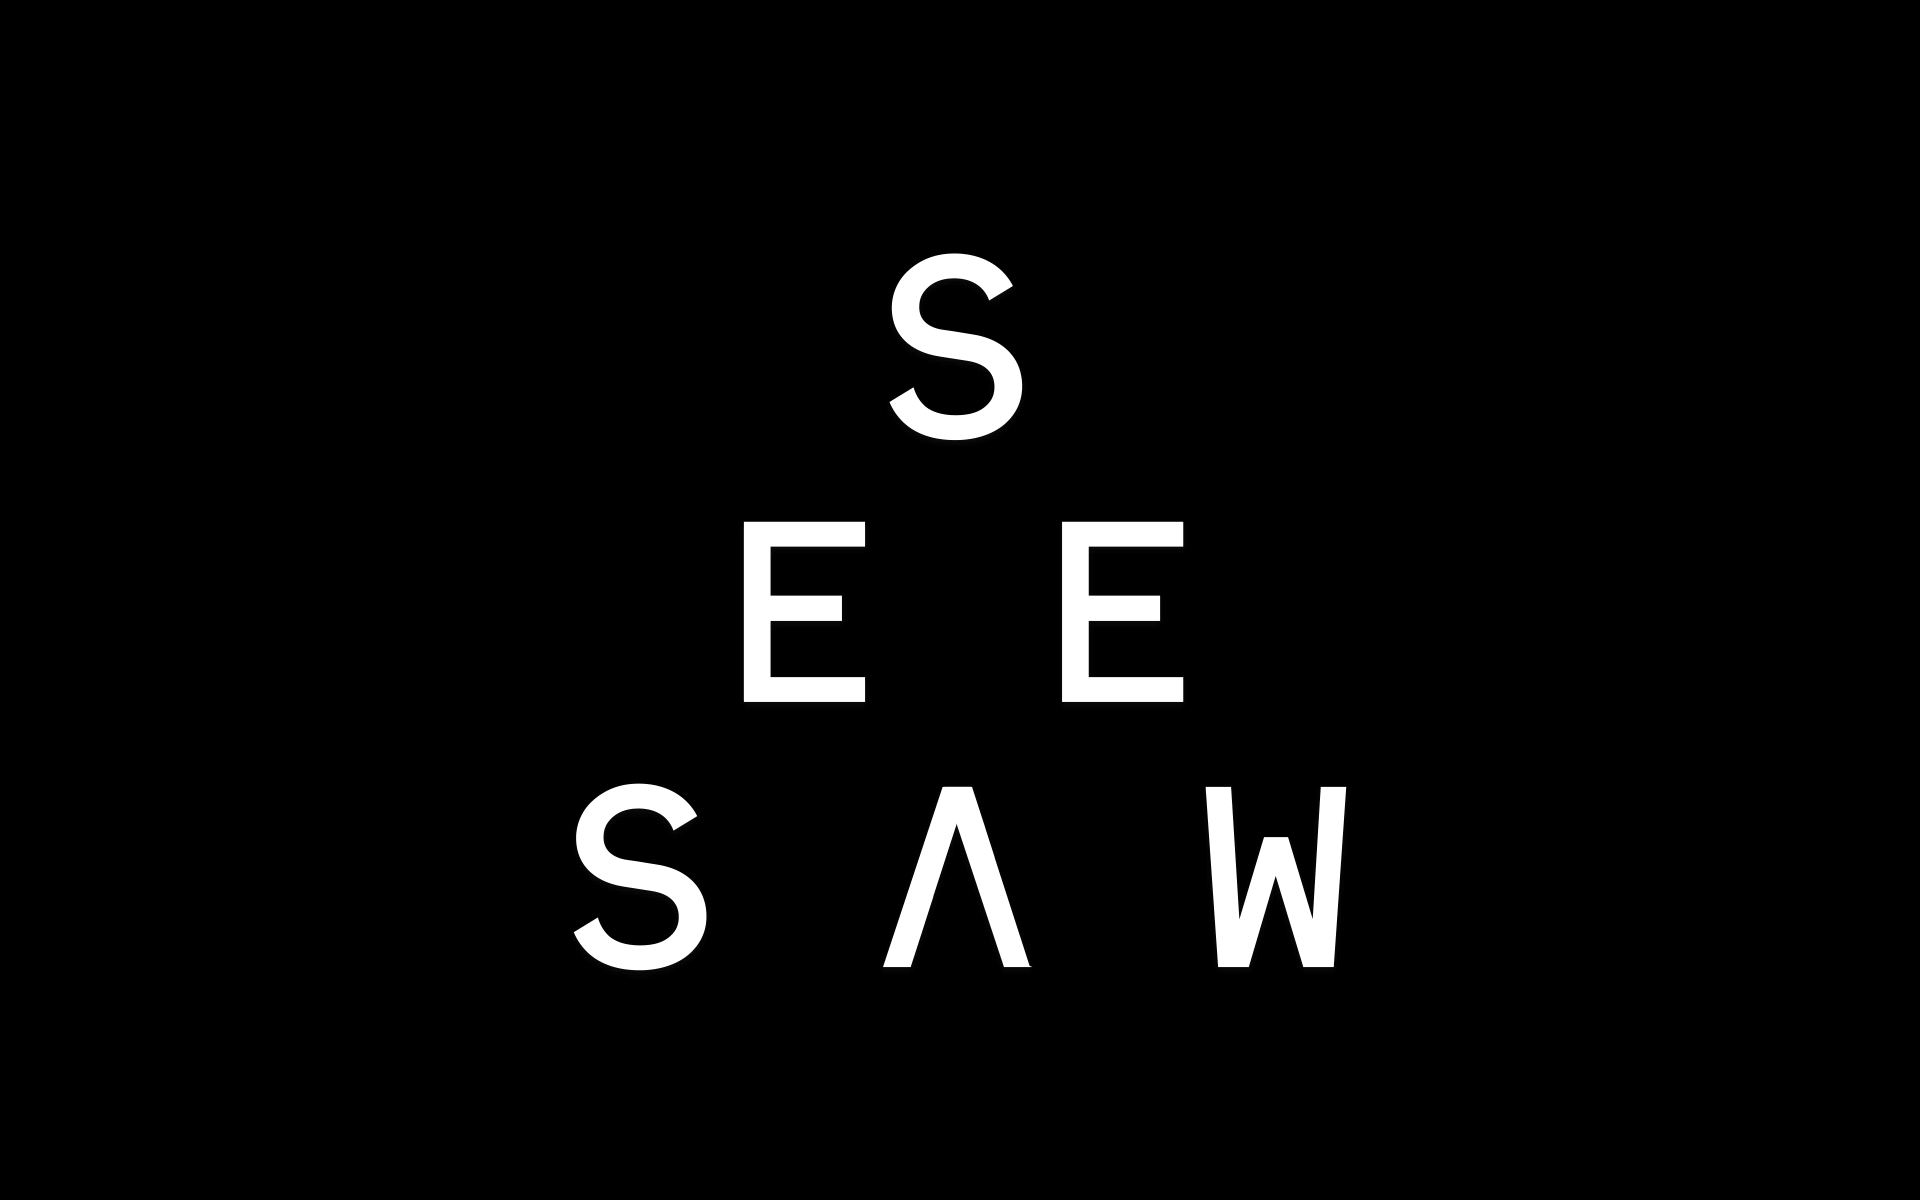 Sam Chisholm design Seesaw